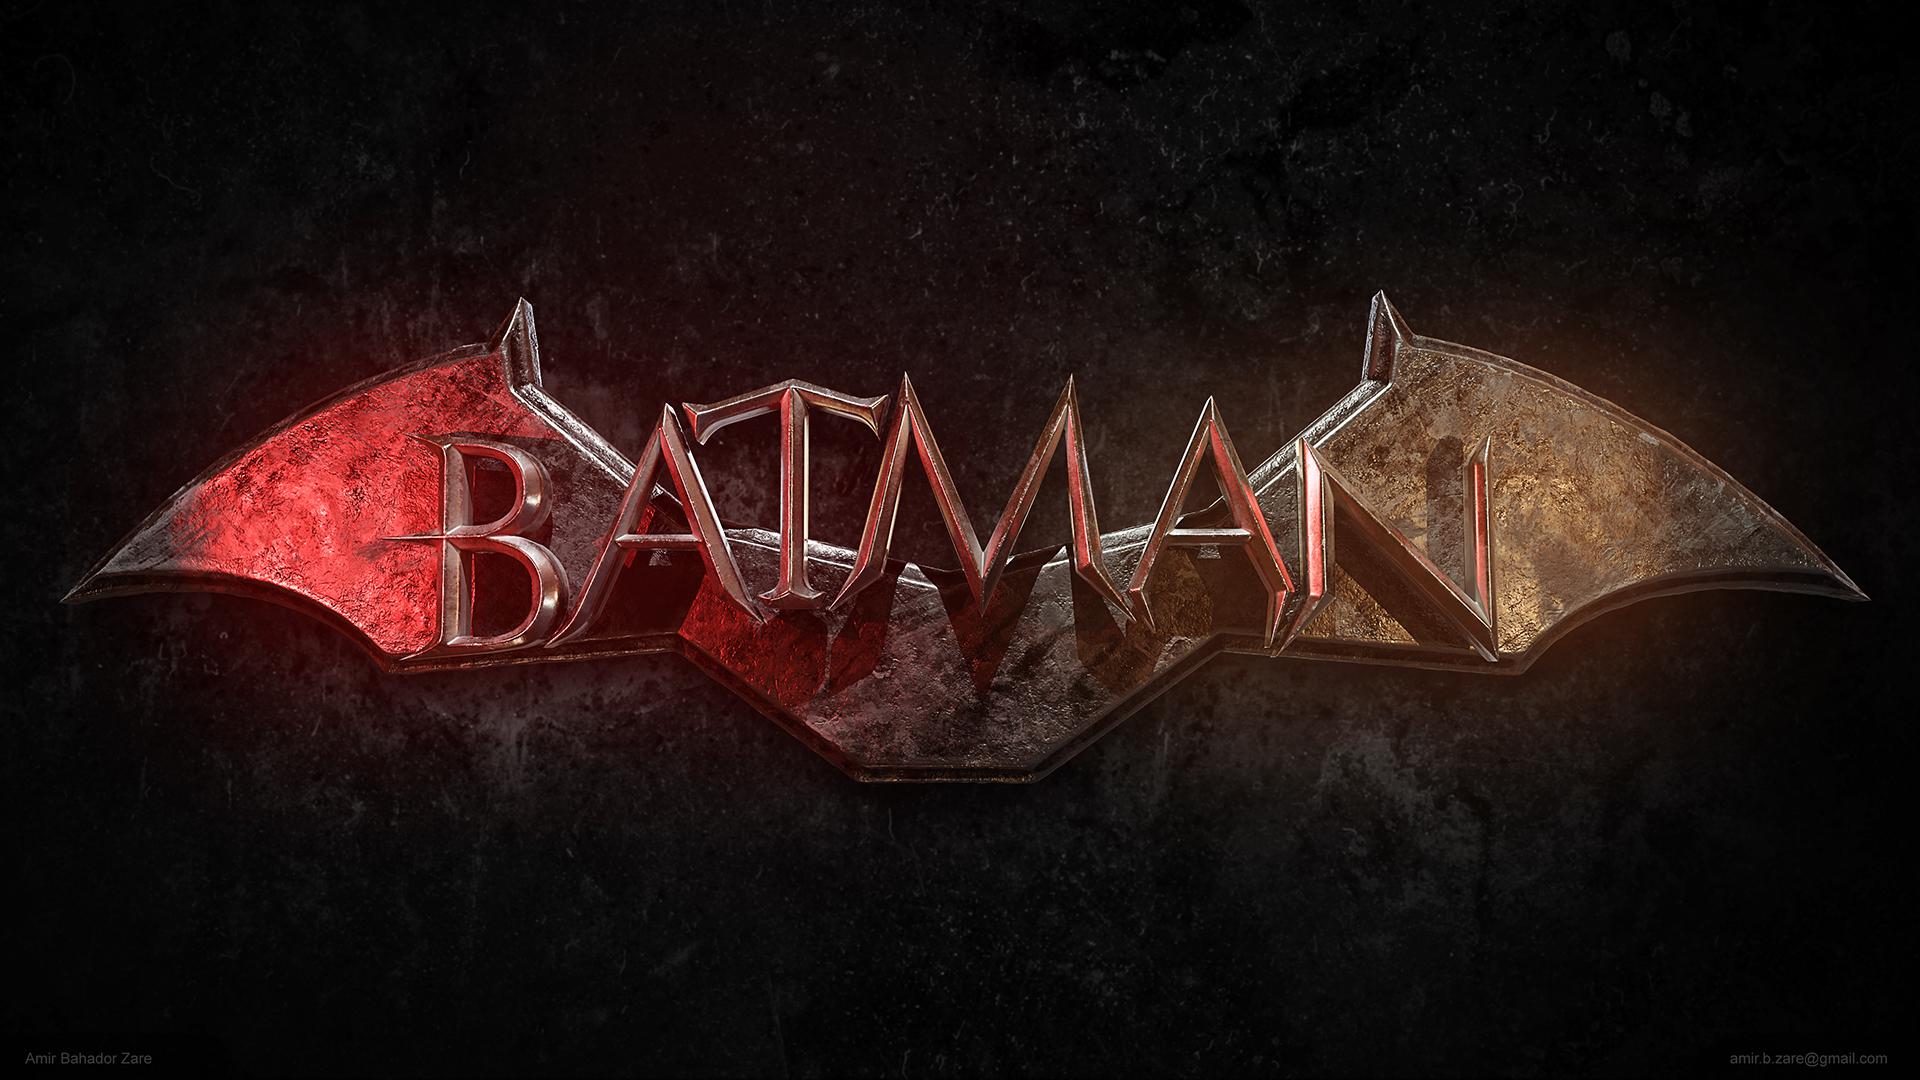 FAN MADE: Batman 2021 Logo Concept By Amir Bahador Zare, DC_Cinematic